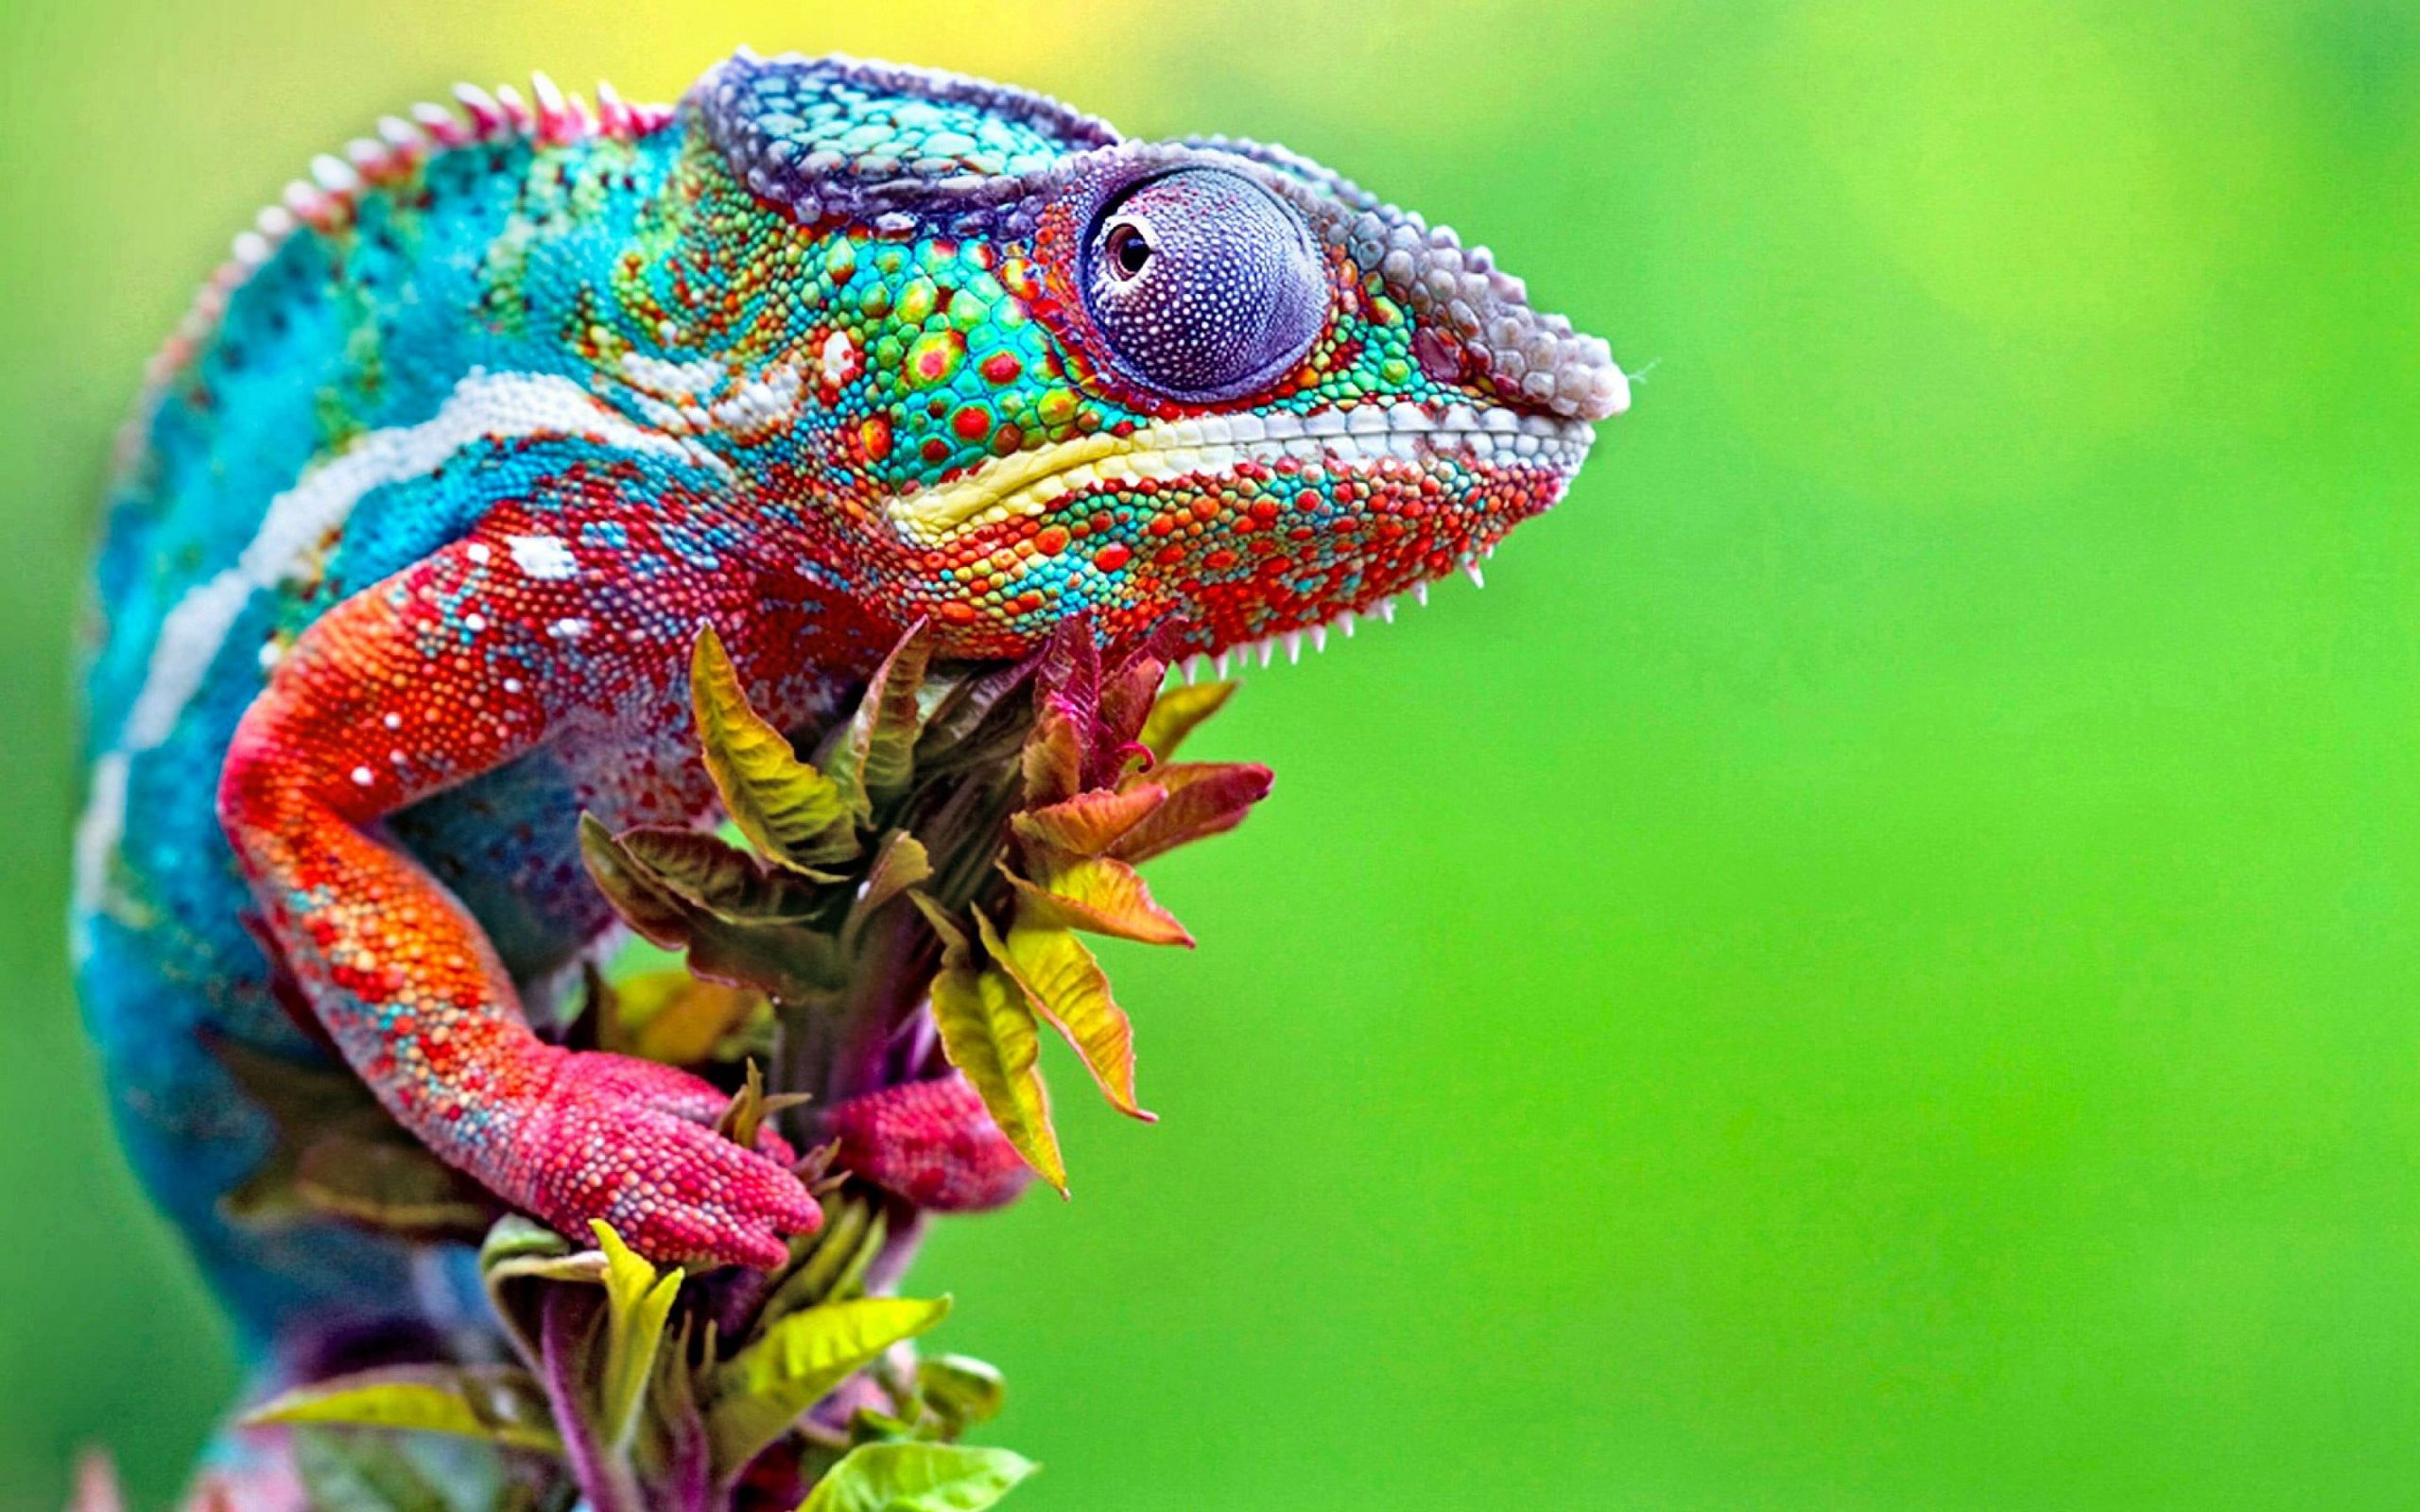 Blue red and purple chameleon wallpaper, chameleons, colorful